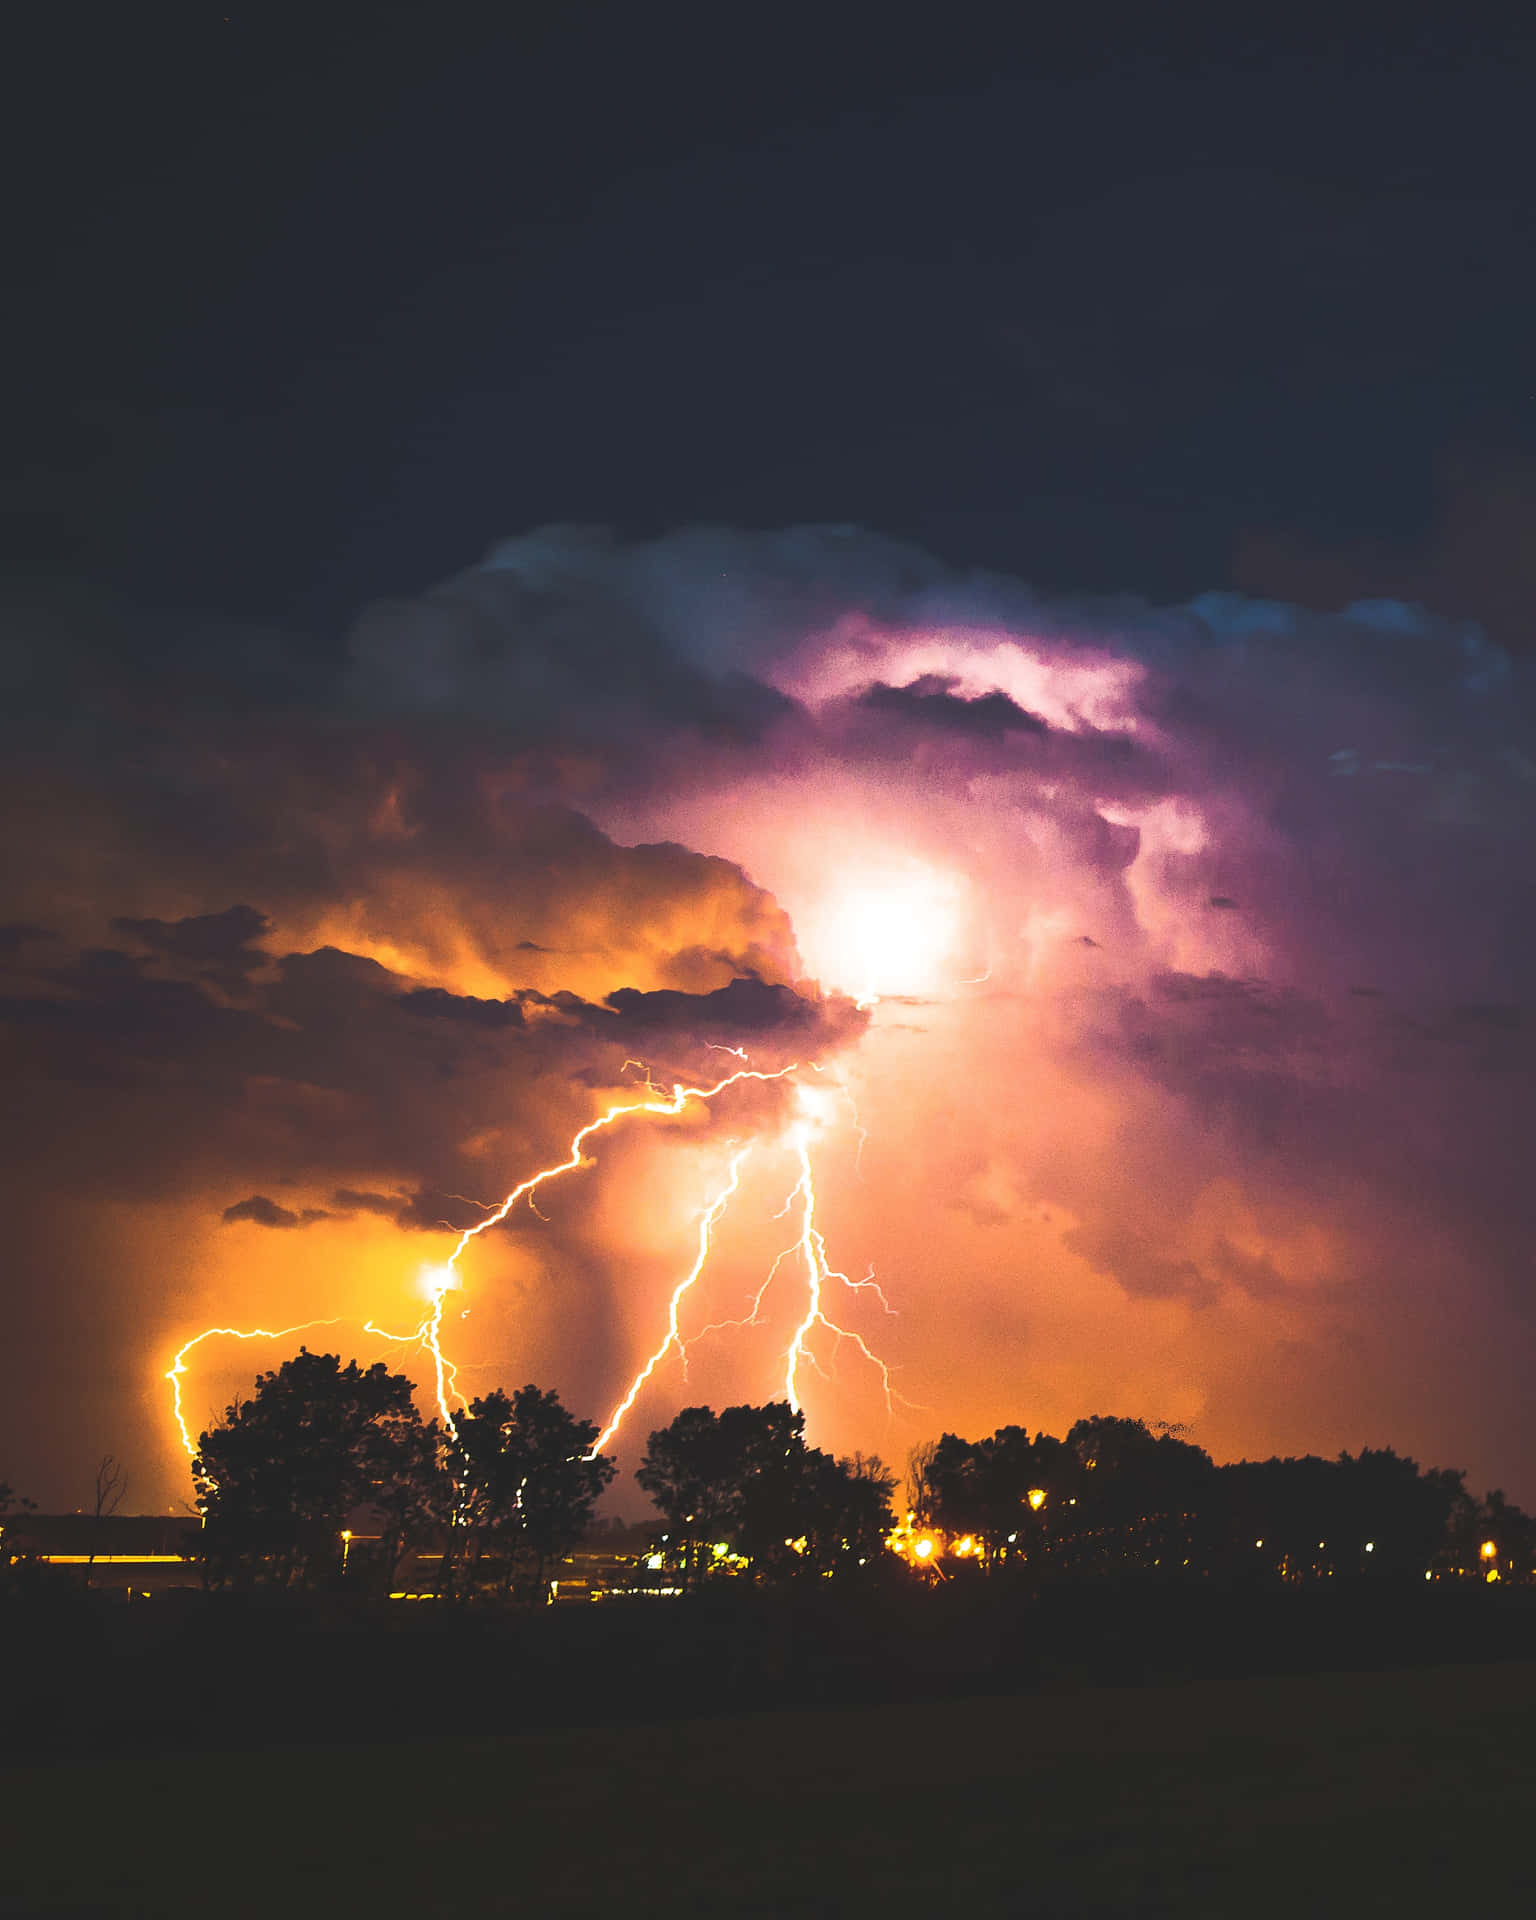 A jagged bolt of lightning illuminates a powerful storm